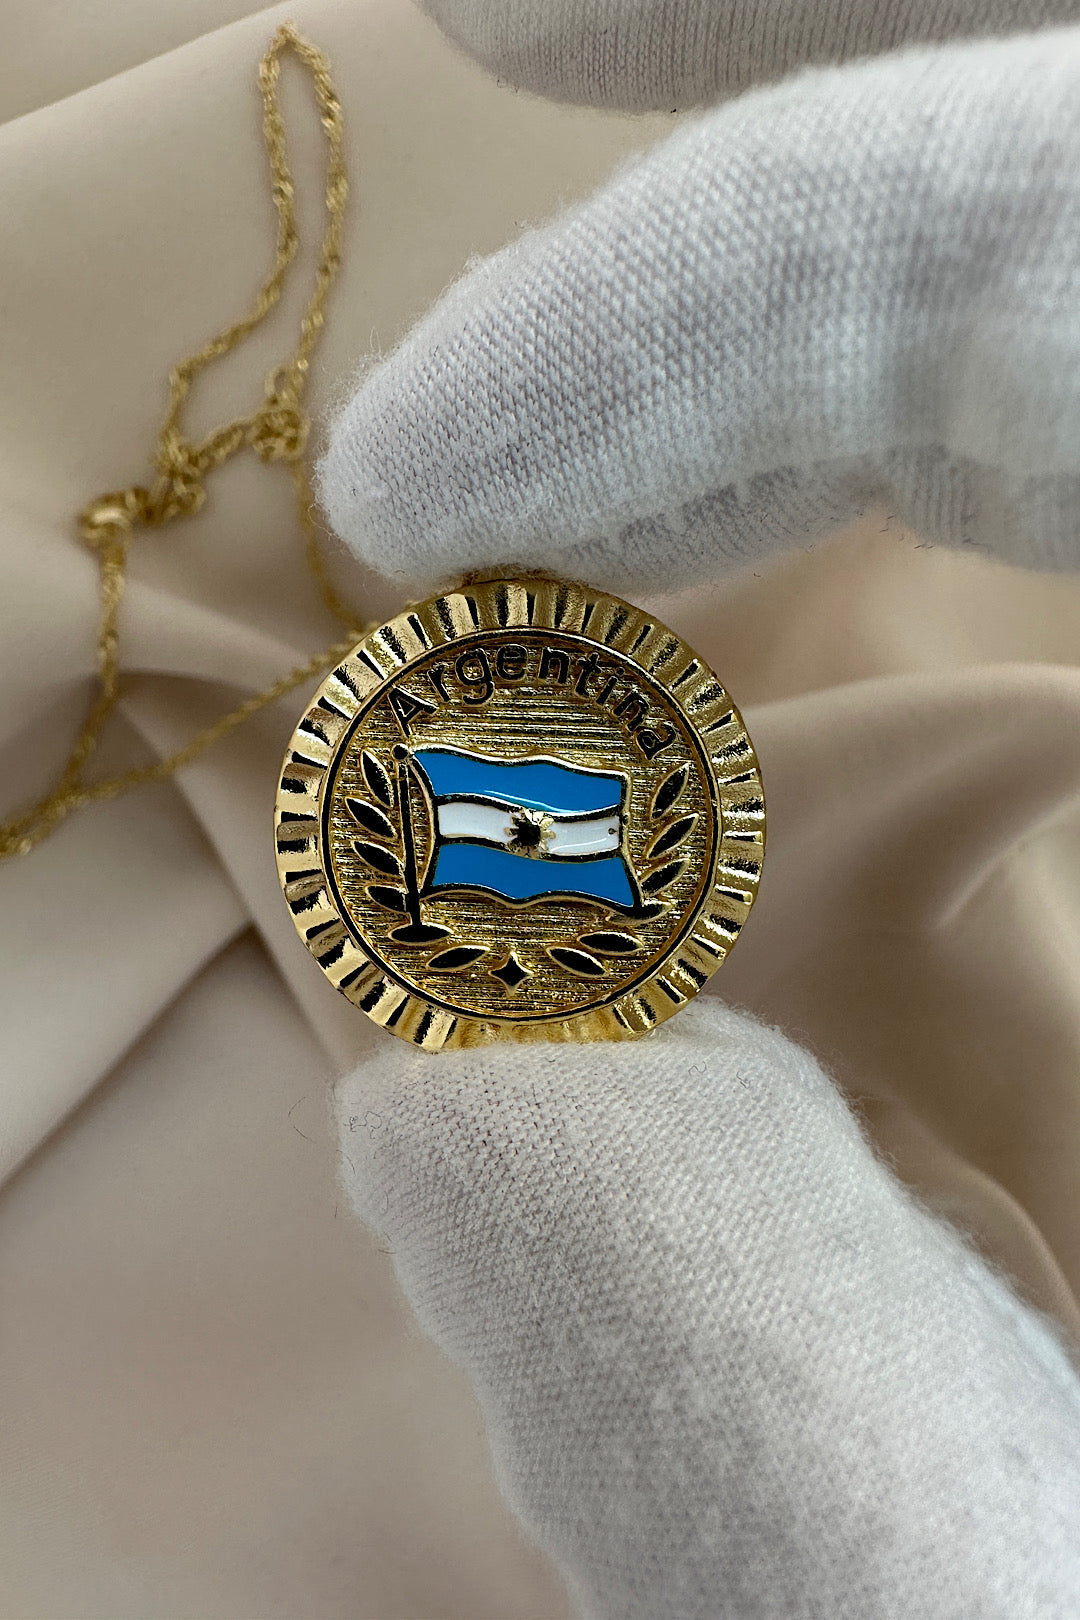 Argentina flag Necklace